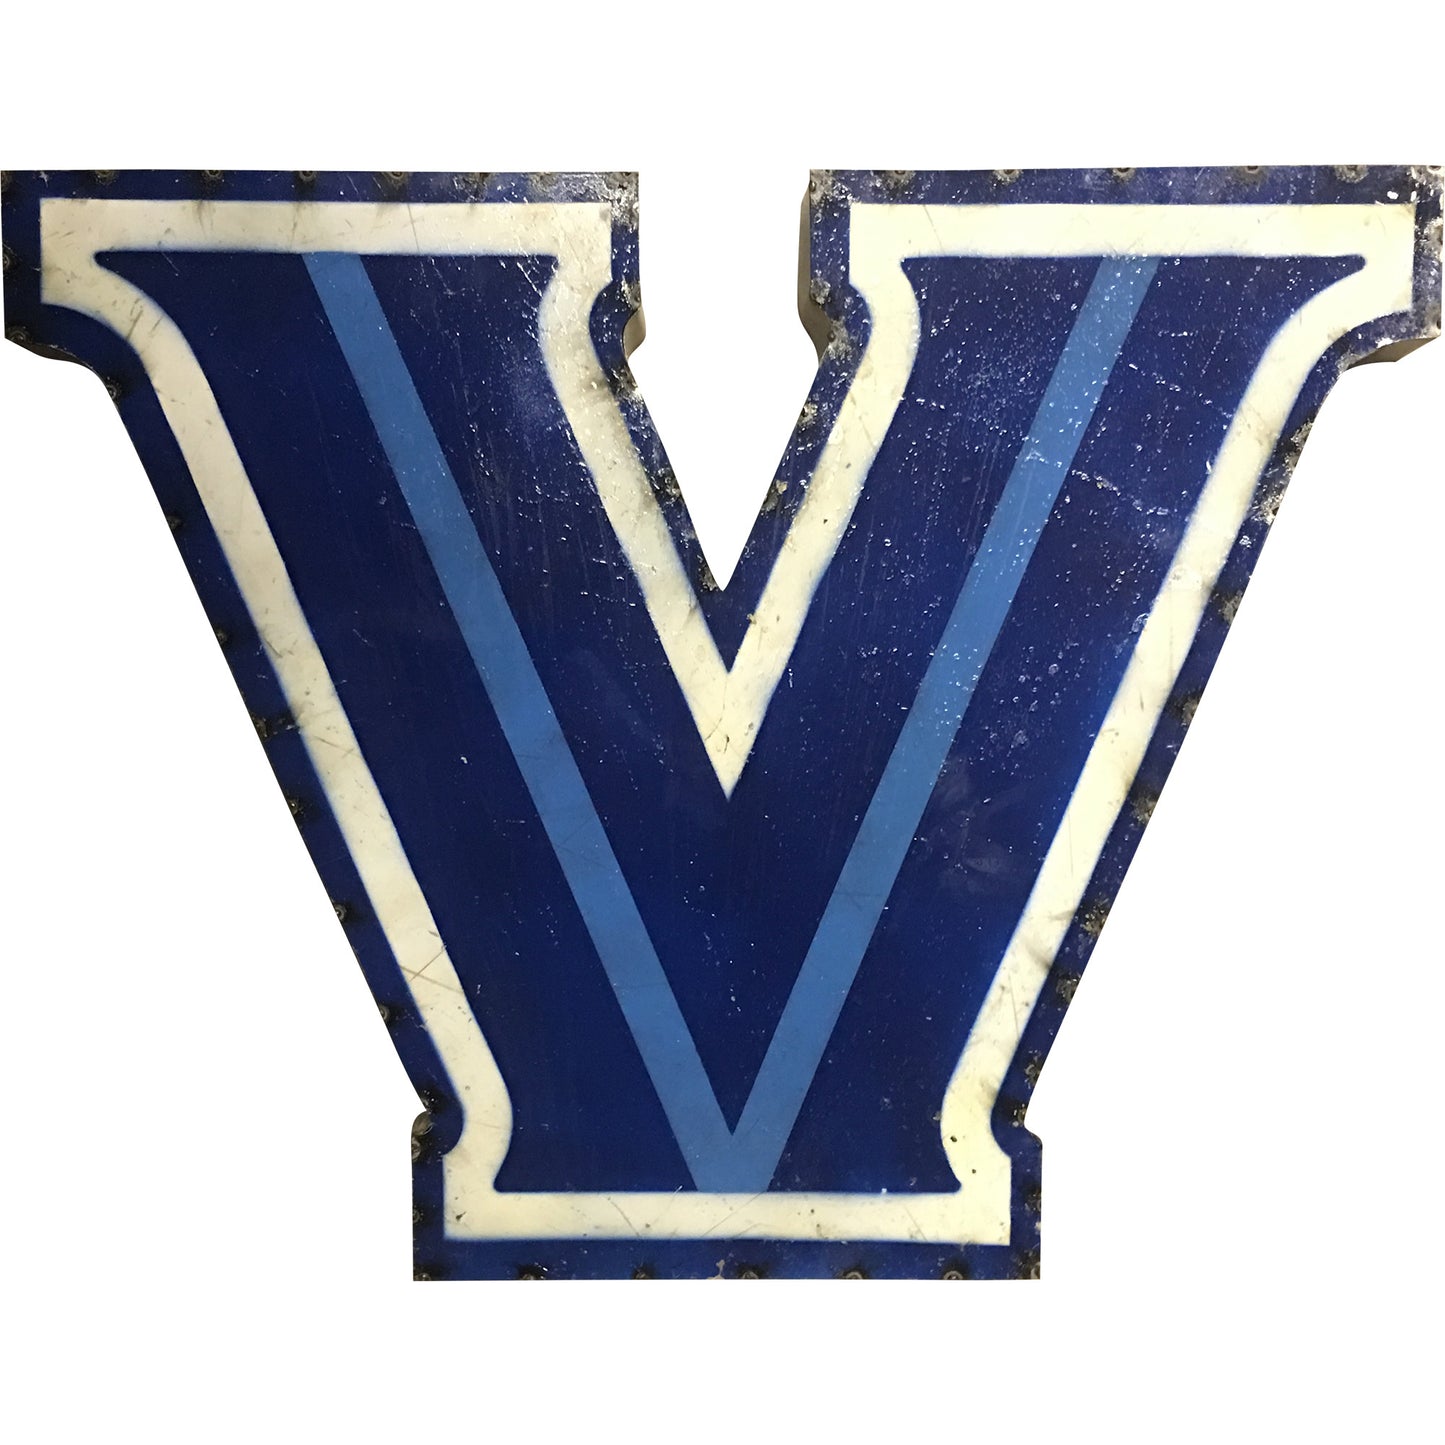 Villanova University "V" Logo Recycled Metal Wall Decor